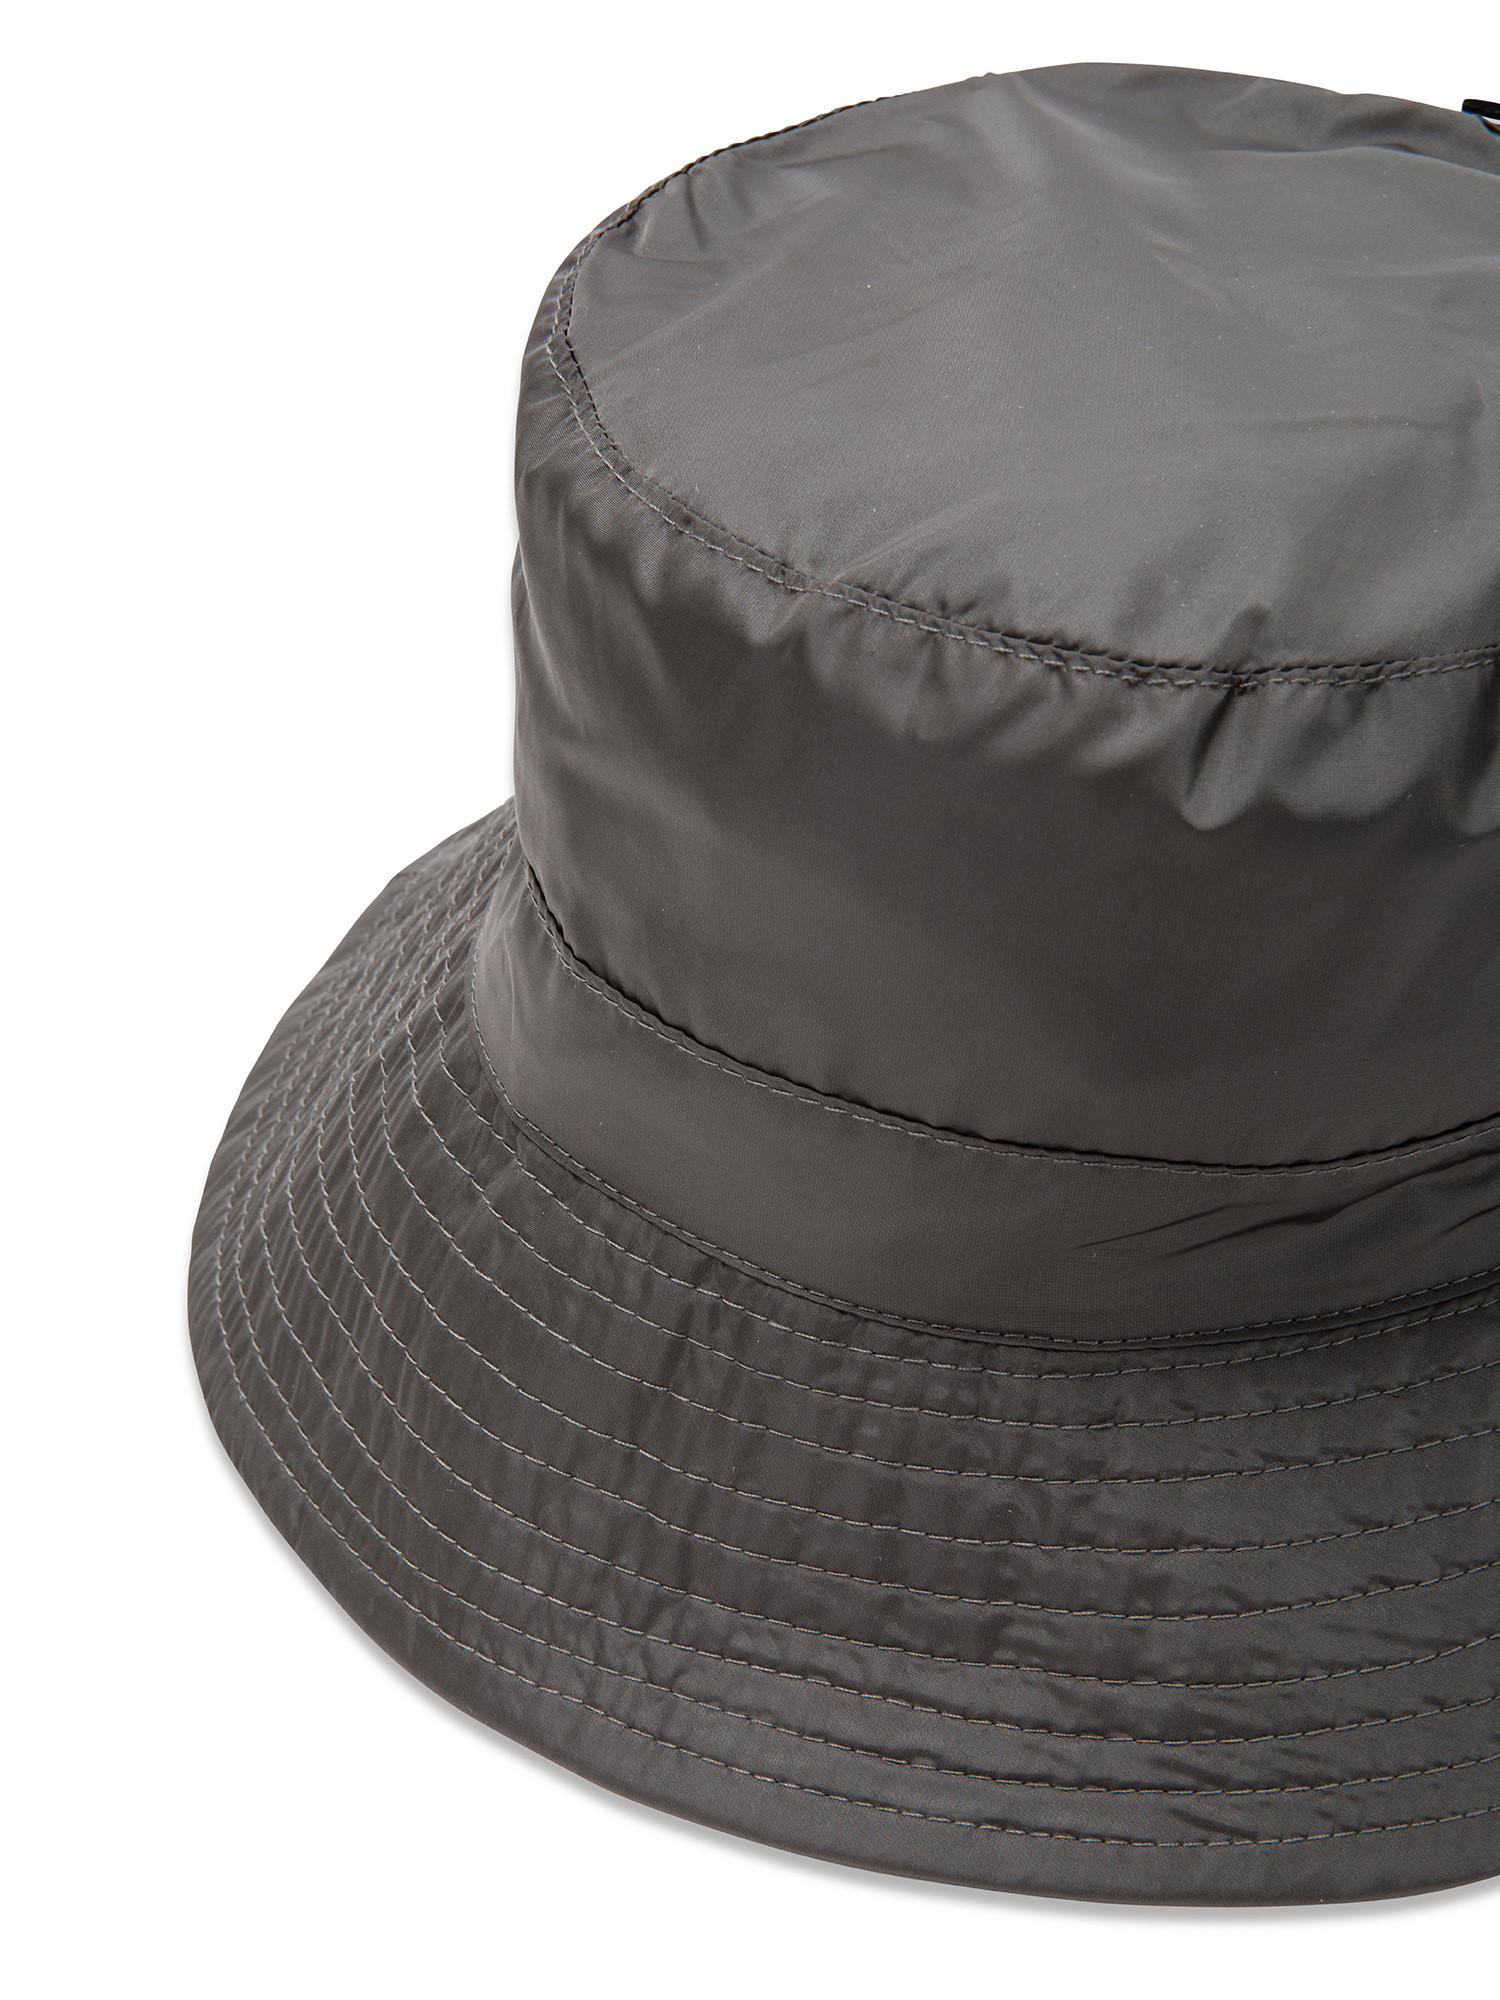 Koan - Cappello in nylon, Grigio scuro, large image number 1